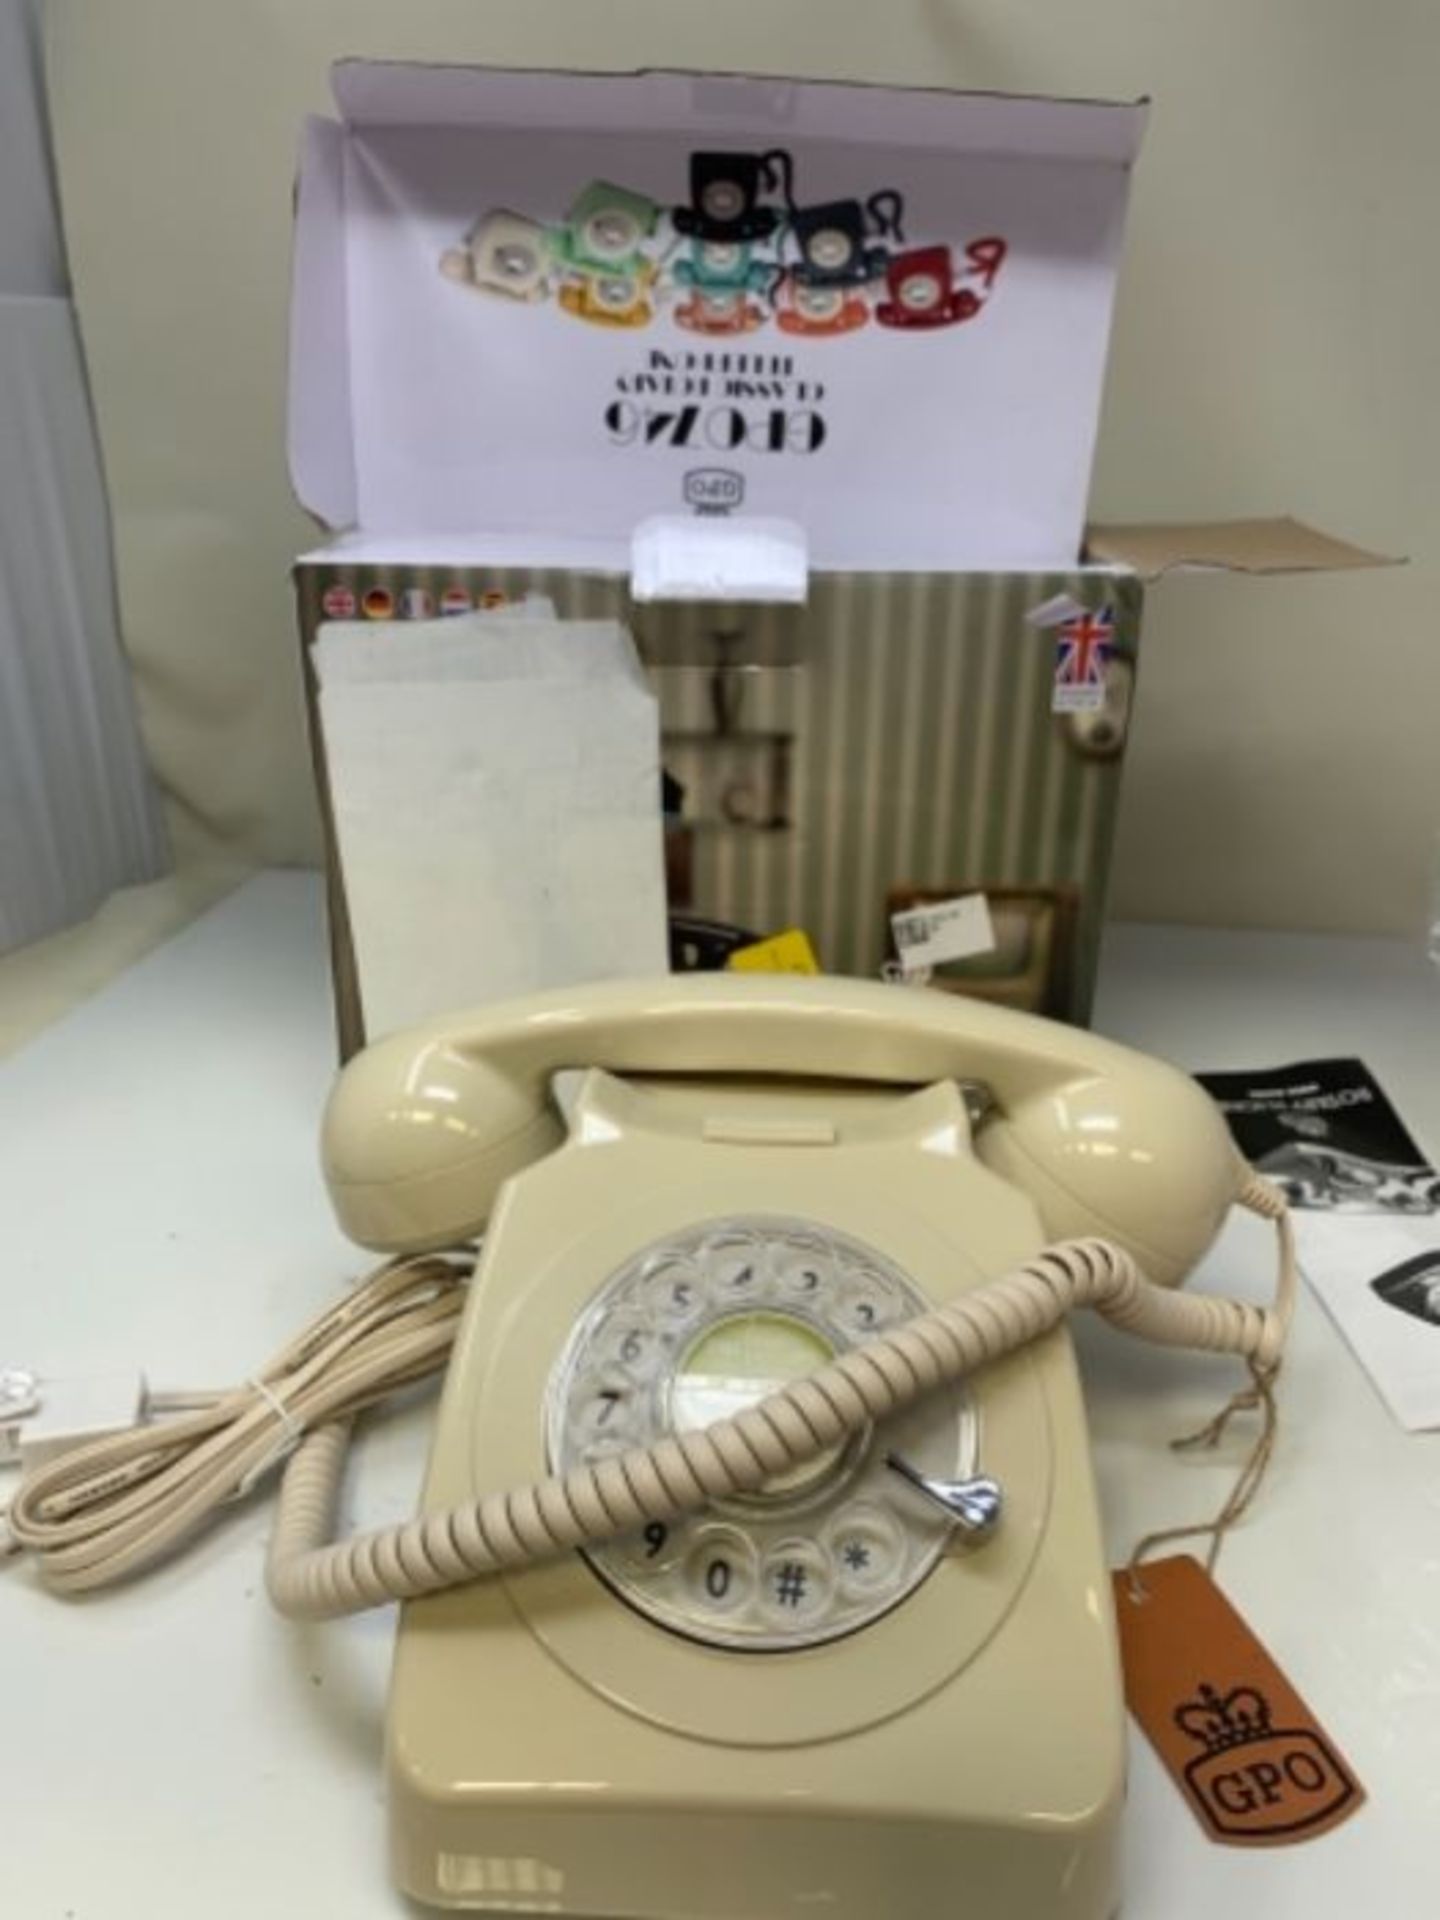 GPO 746 Rotary 1970s-Style Retro Landline Telephone, Classic Telephone with Ringer On/ - Image 3 of 3